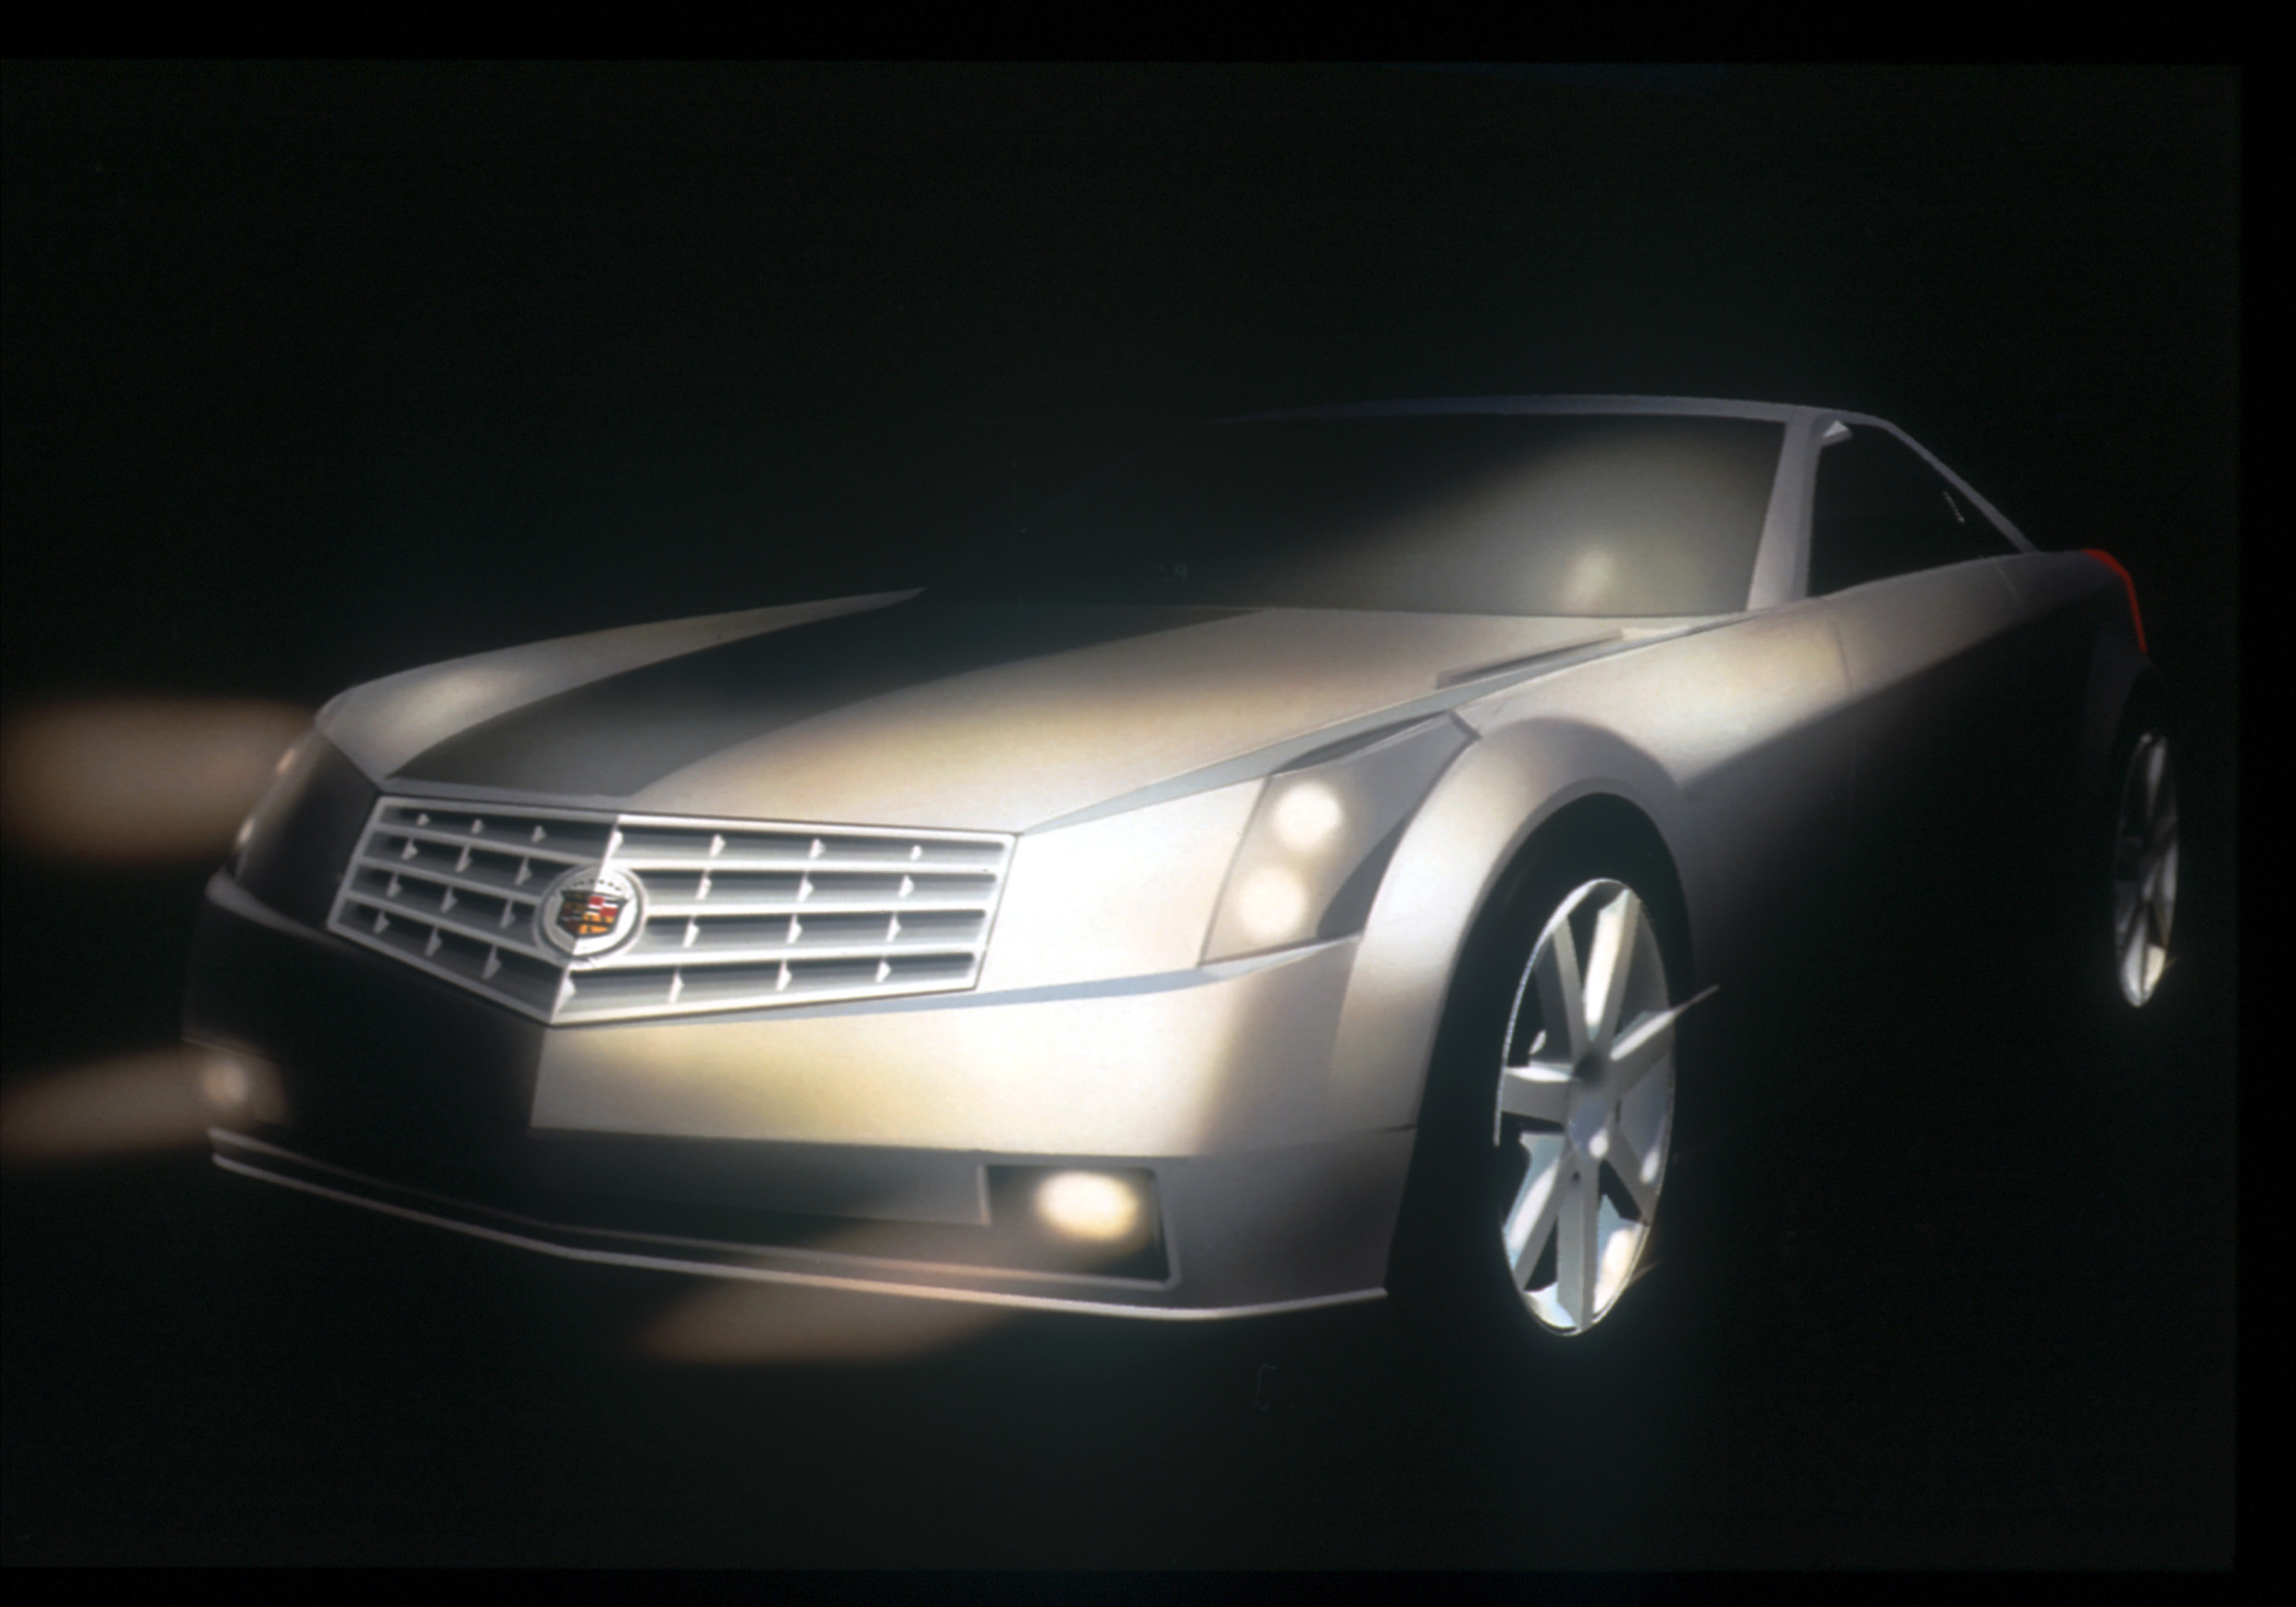 Cadillac Evoq Concept, 1999 - Design Sketch